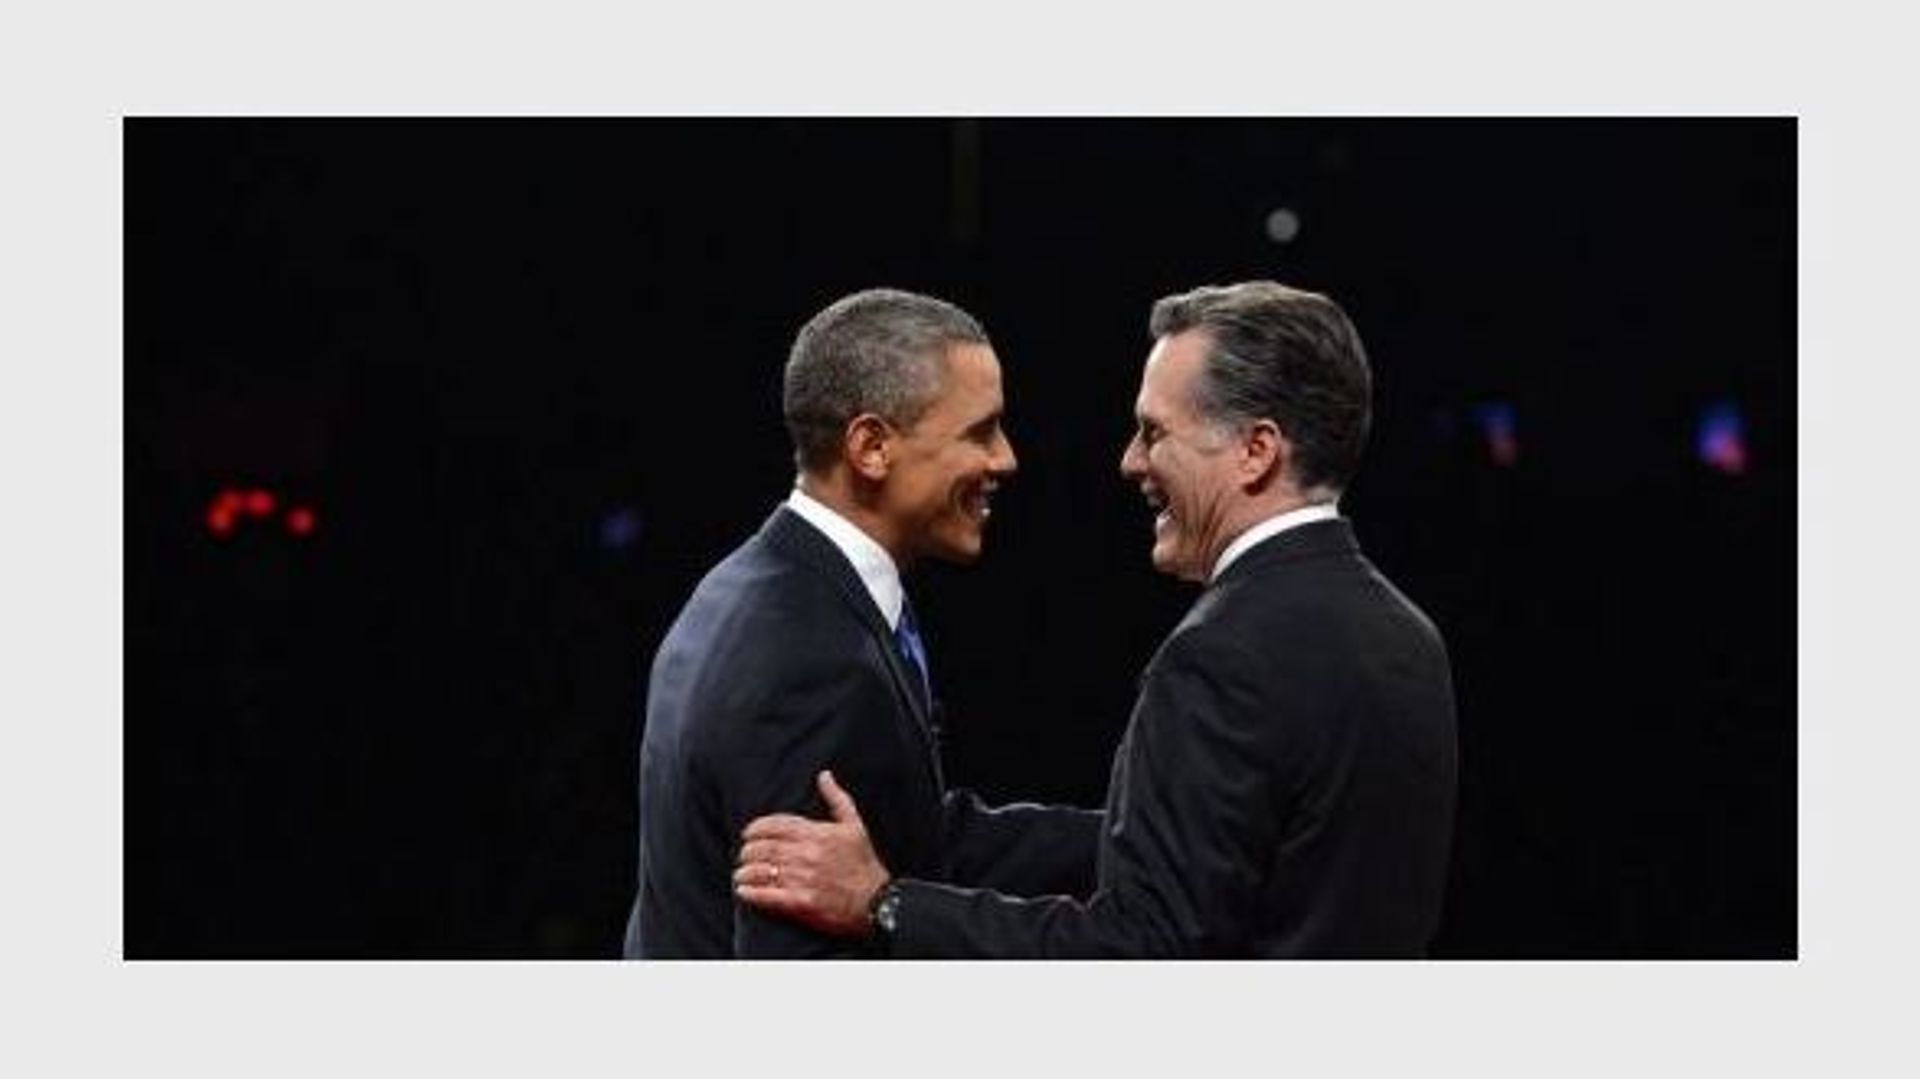 usa-mitt-romney-a-domine-barack-obama-dans-le-premier-debat